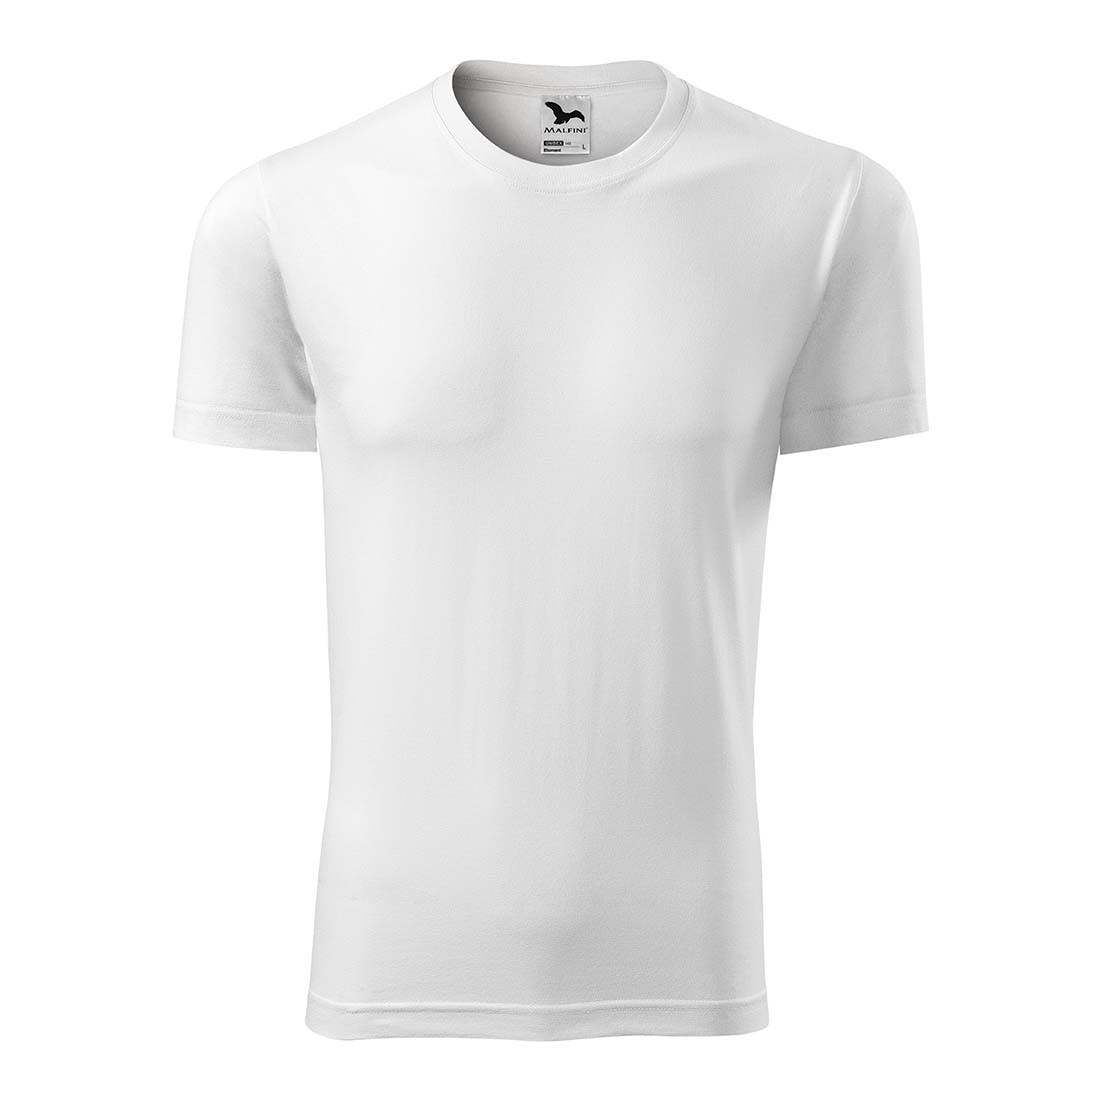 Unisex T-Shirt unisex - Arbeitskleidung